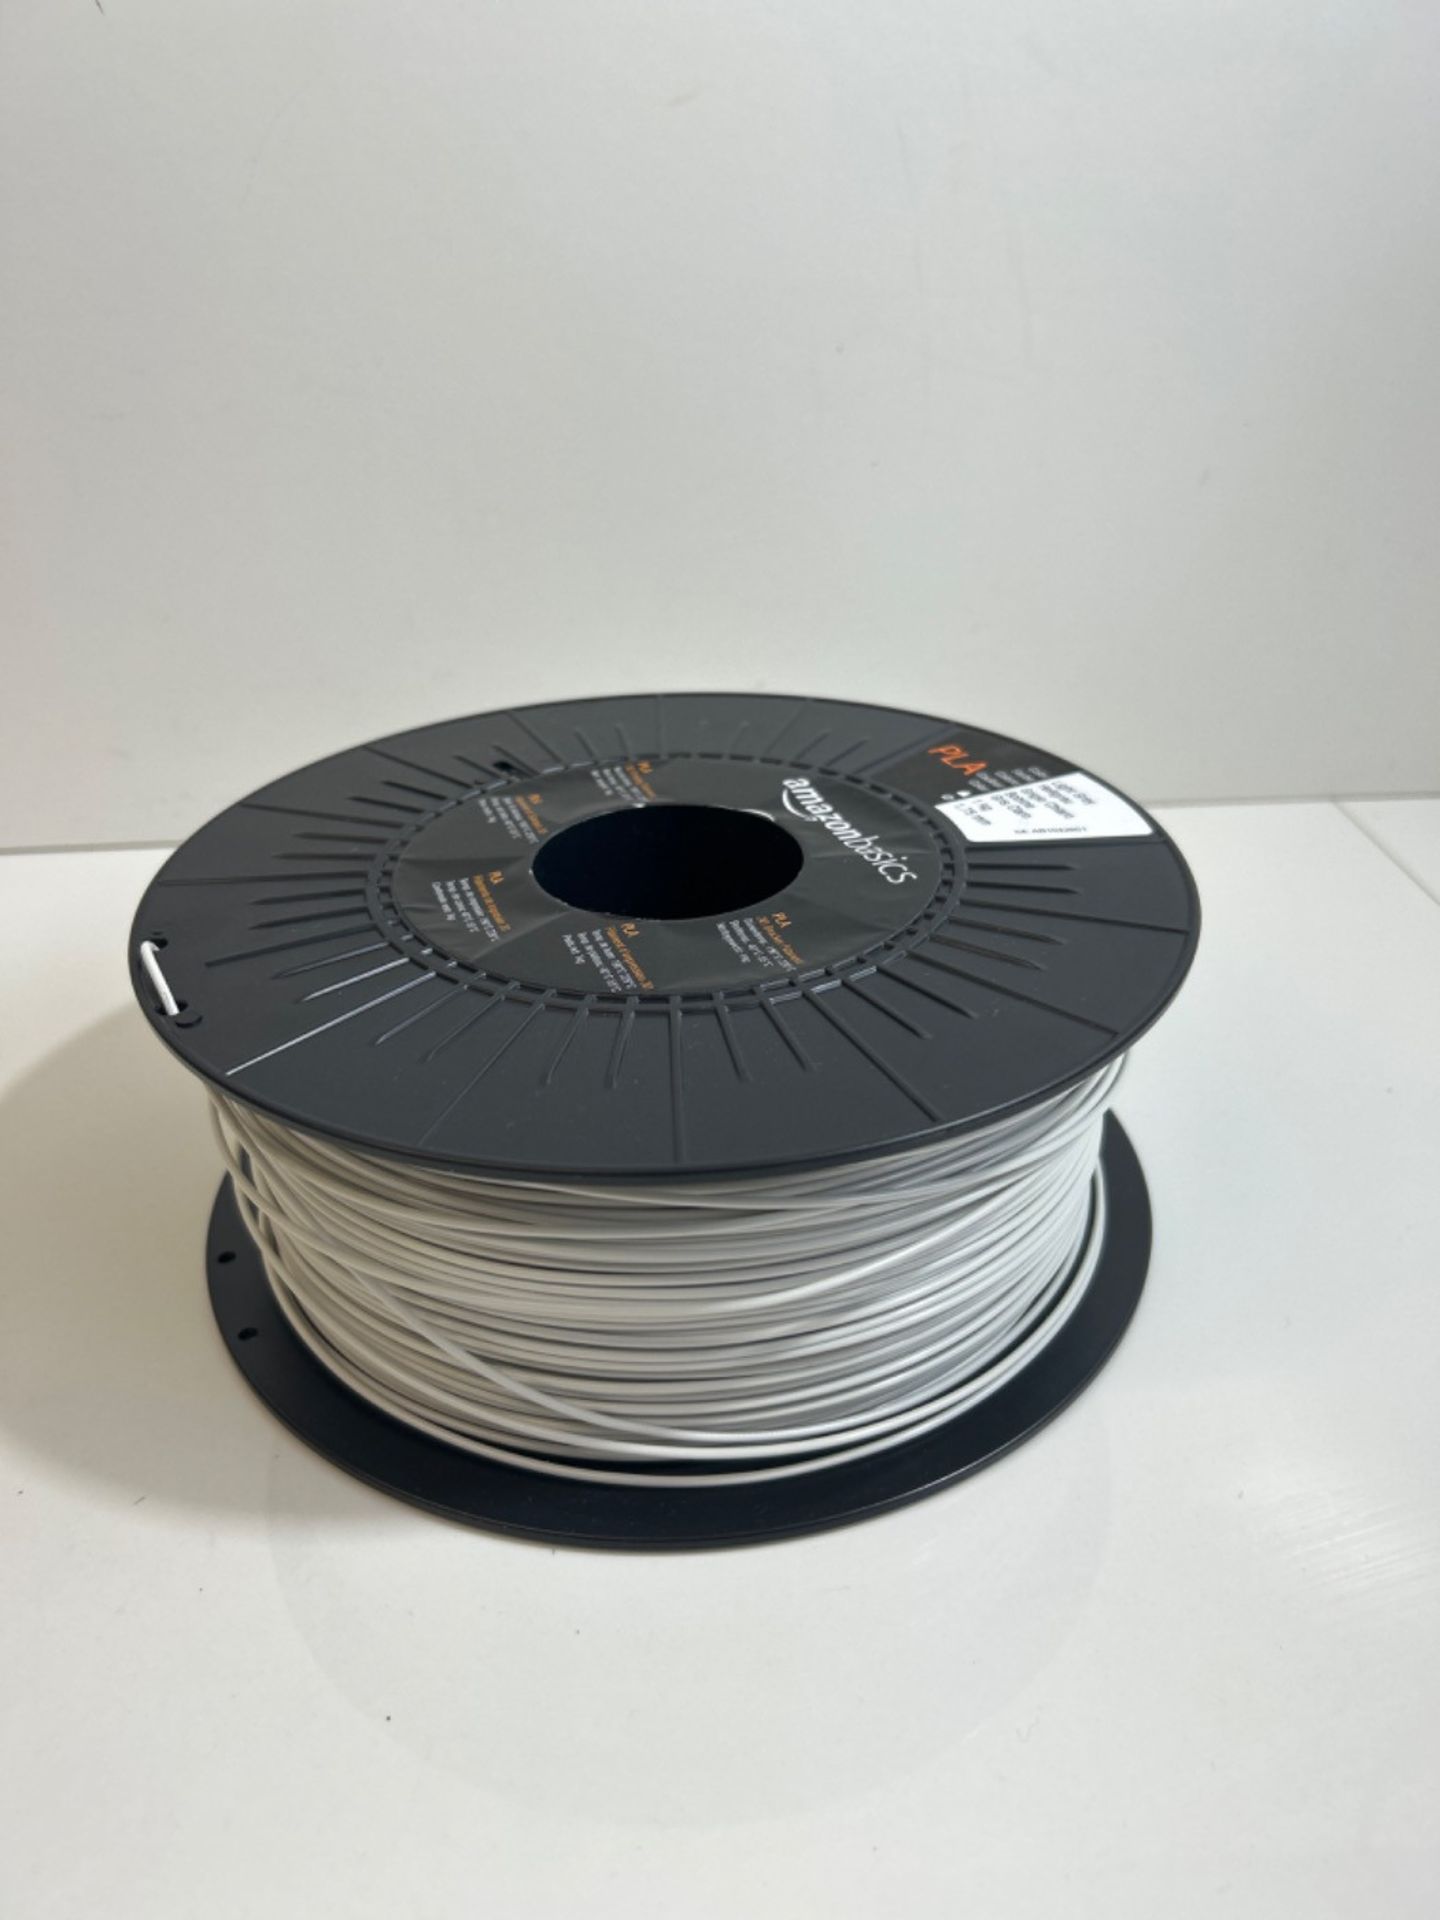 Amazon Basics PLA 3D Printer Filament, 1.75 mm, Light Grey , 1 kg Spool - Image 2 of 3